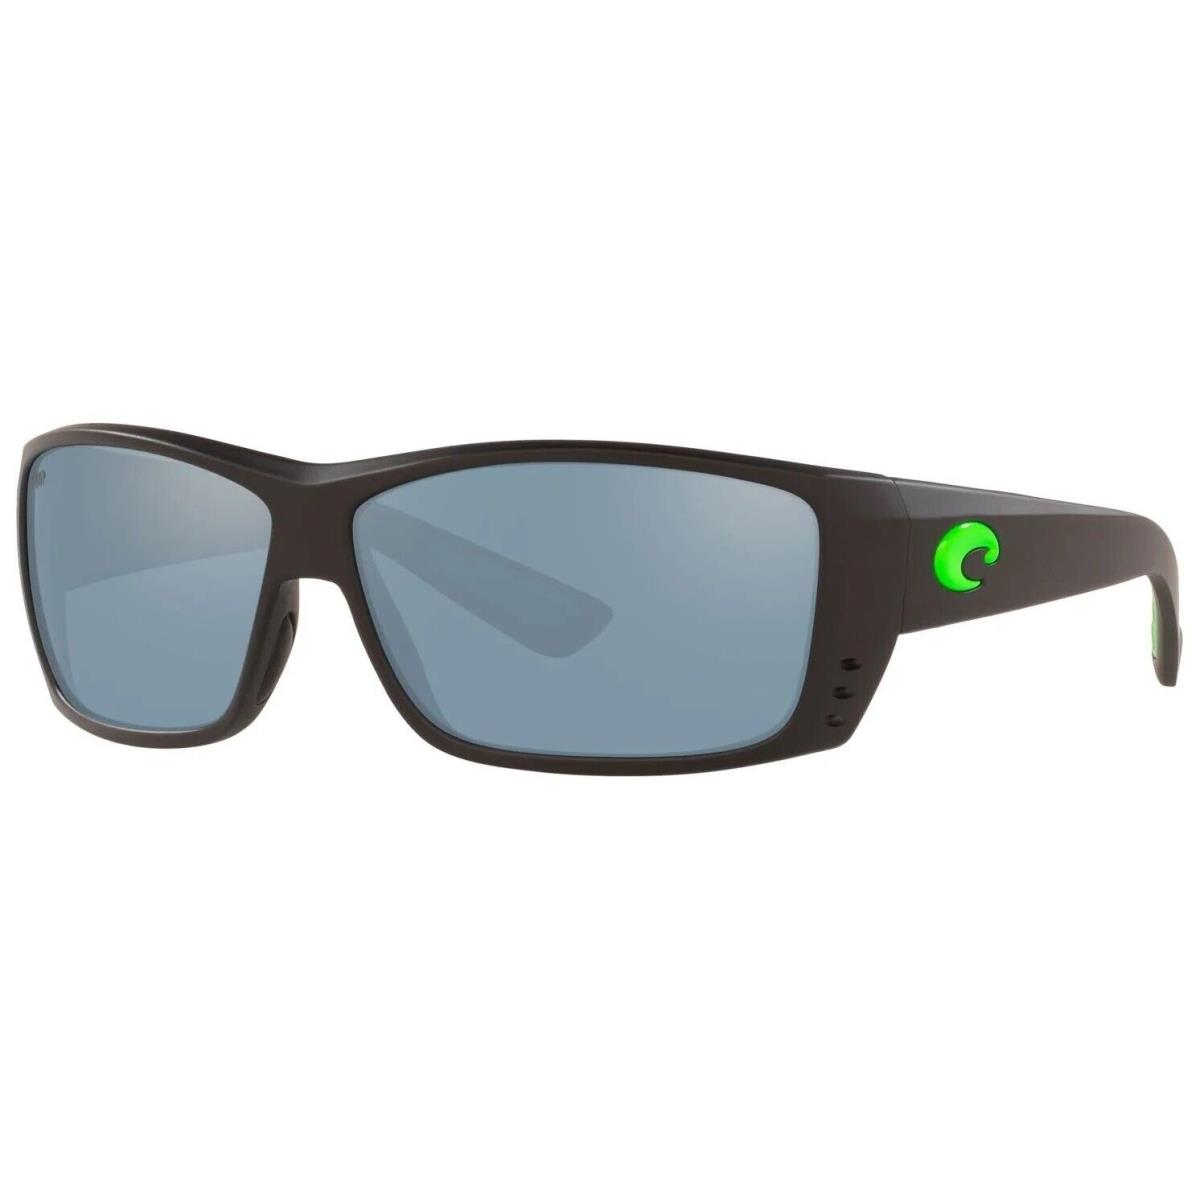 Costa Del Mar Cat Cay Sunglasses Matte Black/green with Gray Silver Mirror 580P - Frame: Black, Lens: Gray